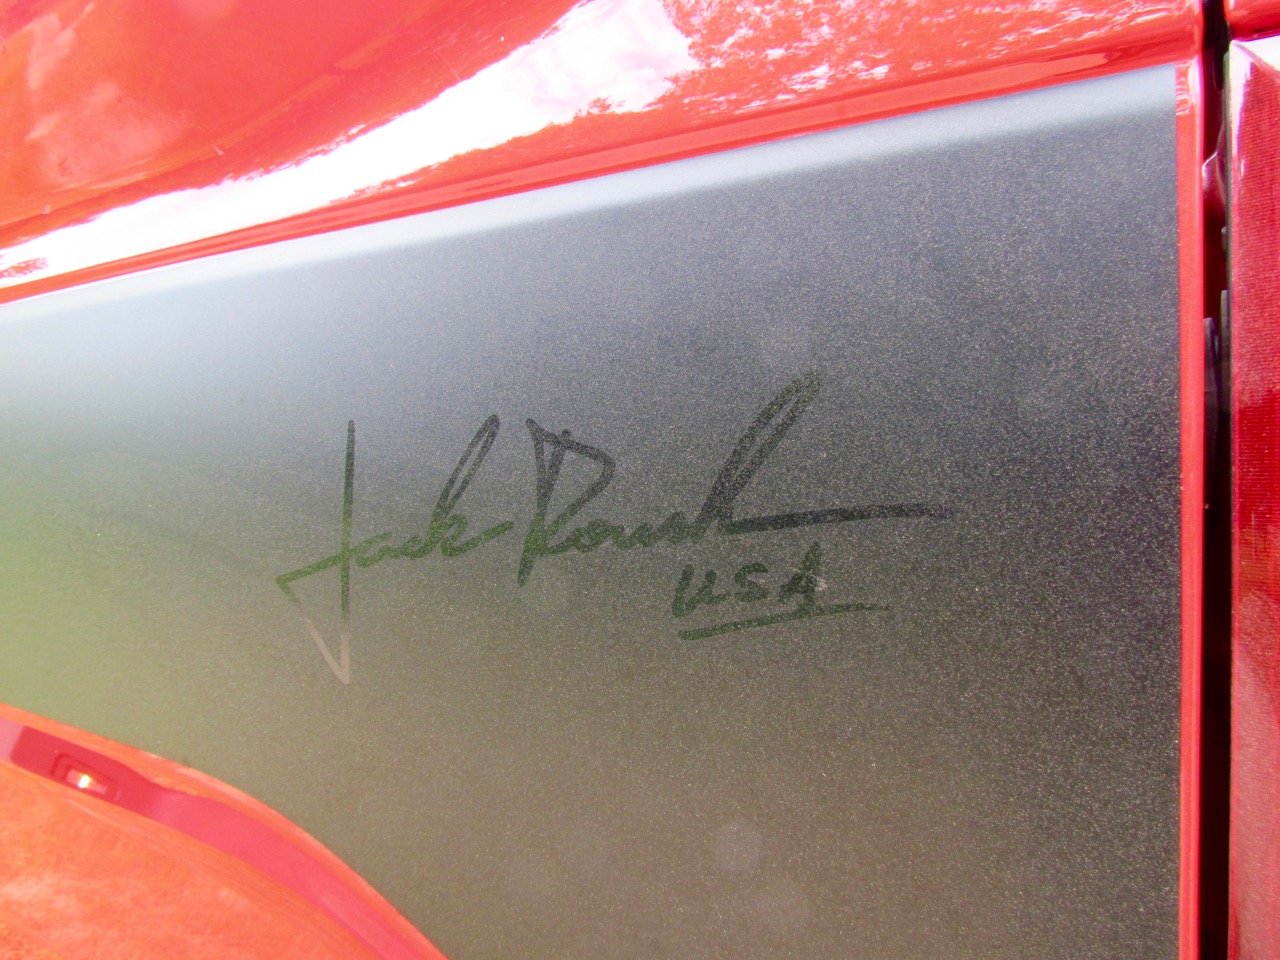 Jack Roush's signature on the truck's tailgate